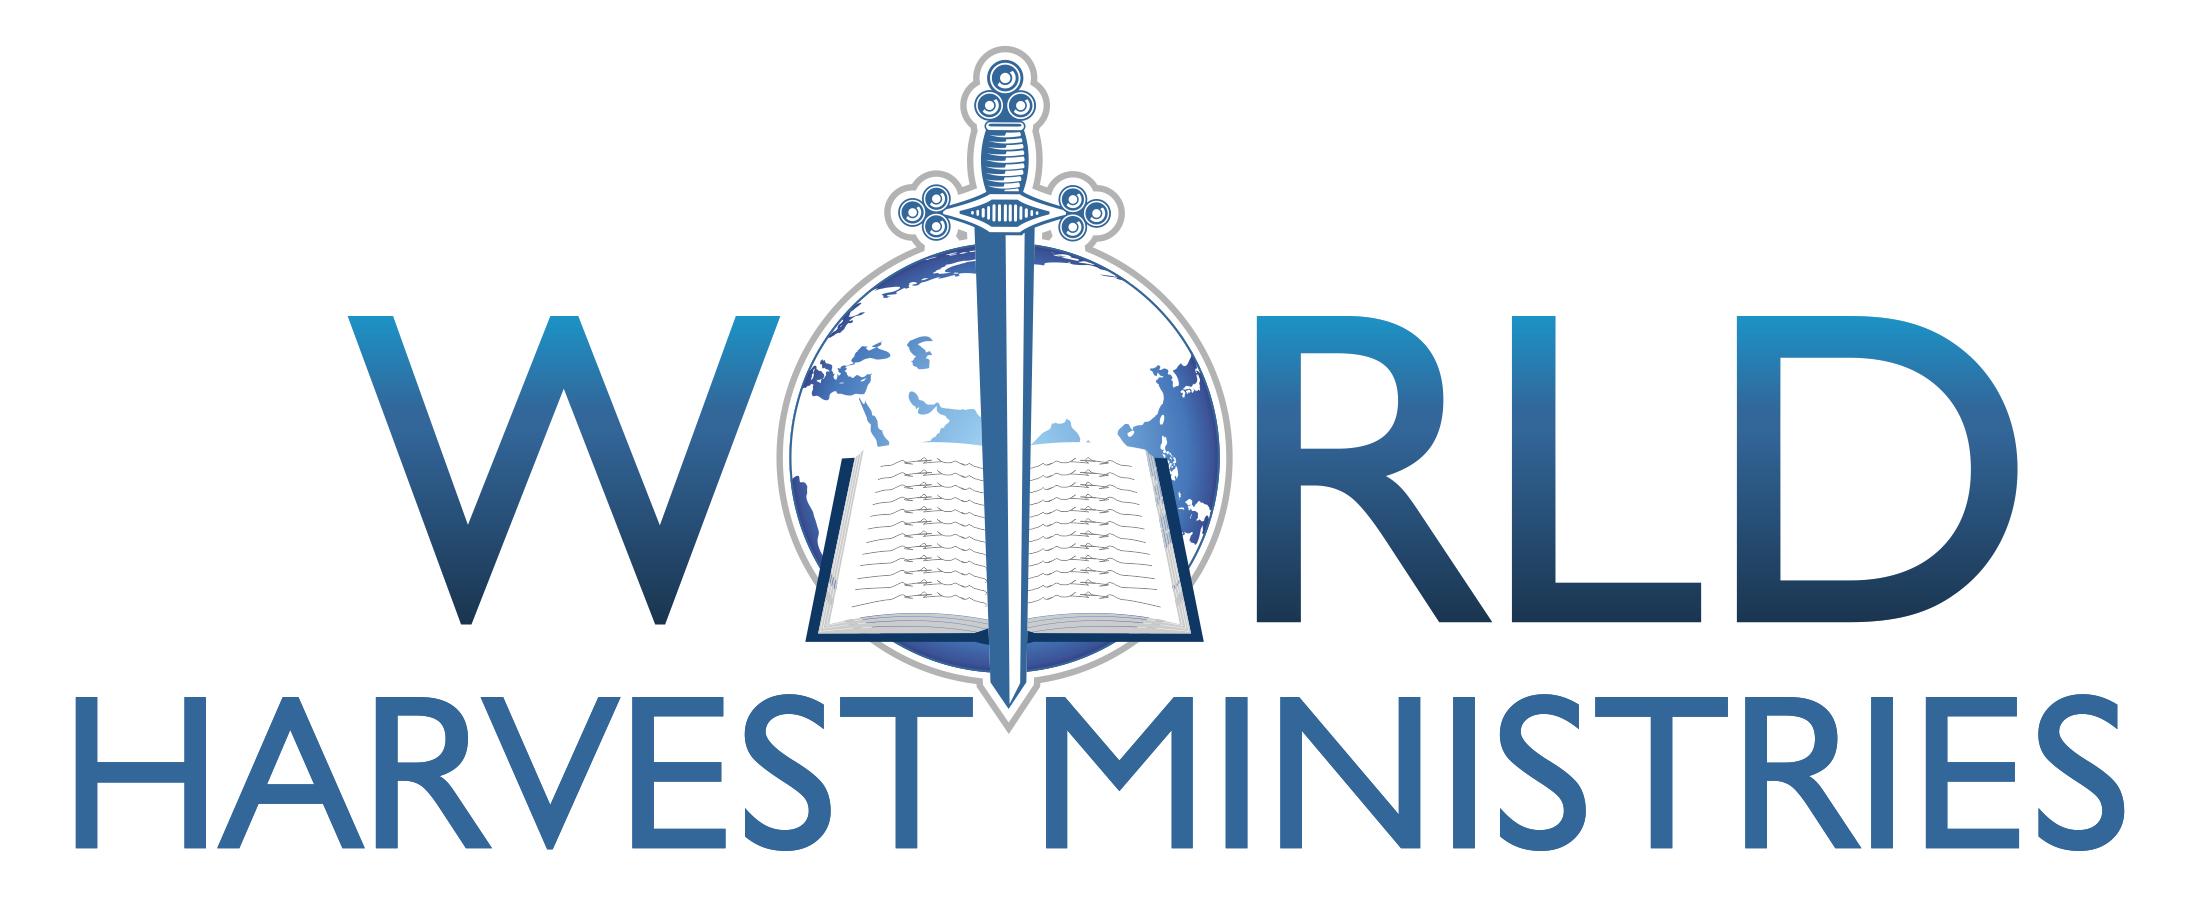 World Harvest Ministries